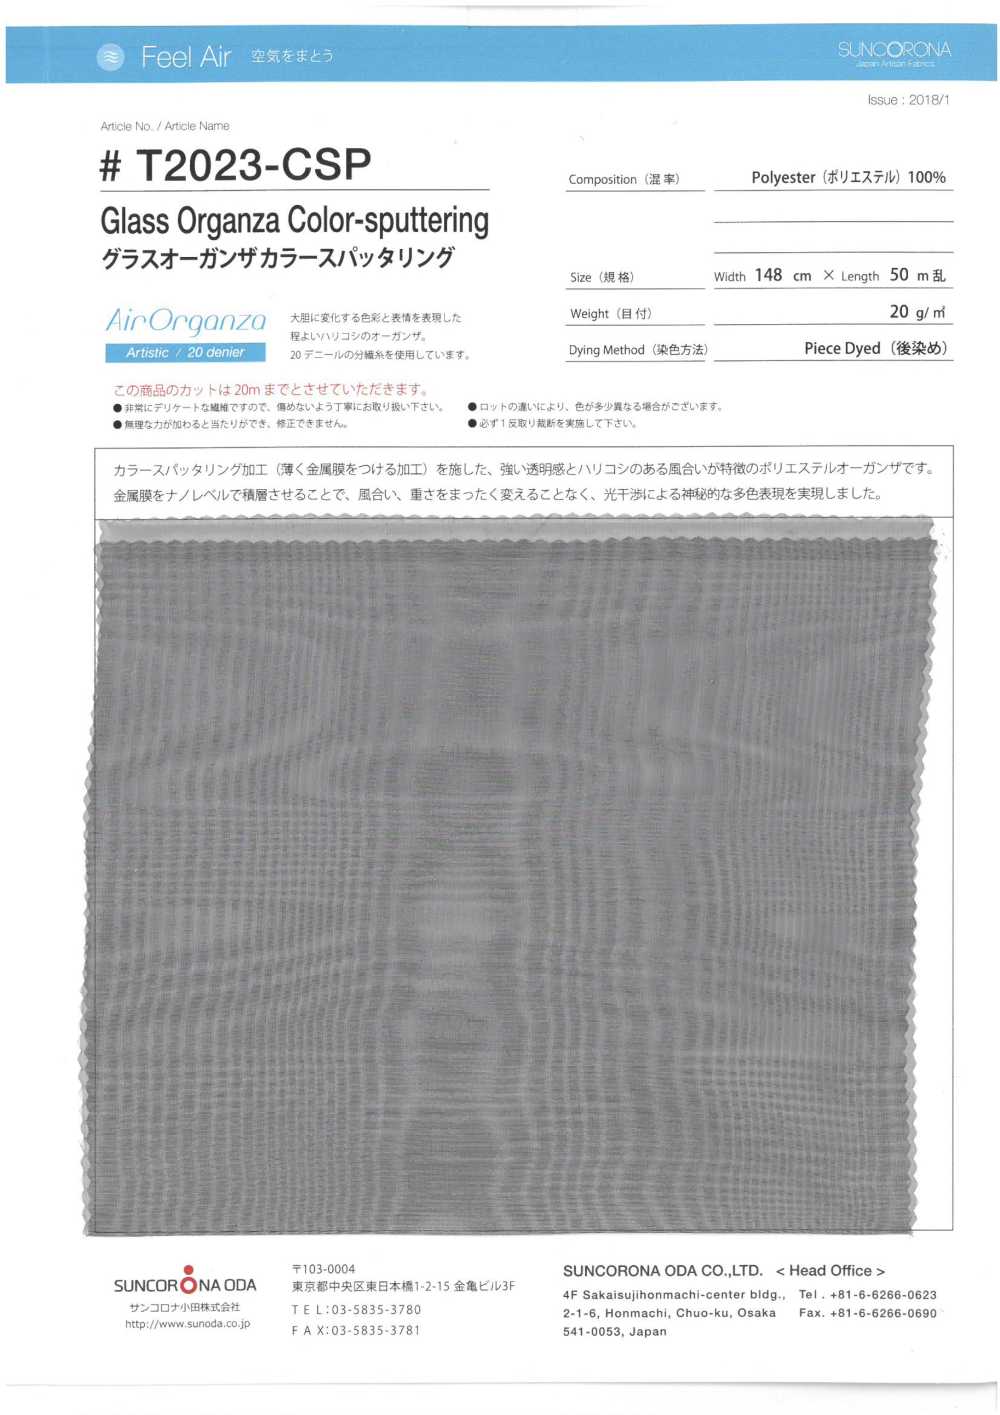 T2023-CSP Pulvérisation De Couleur En Organza De Verre[Fabrication De Textile] Suncorona Oda